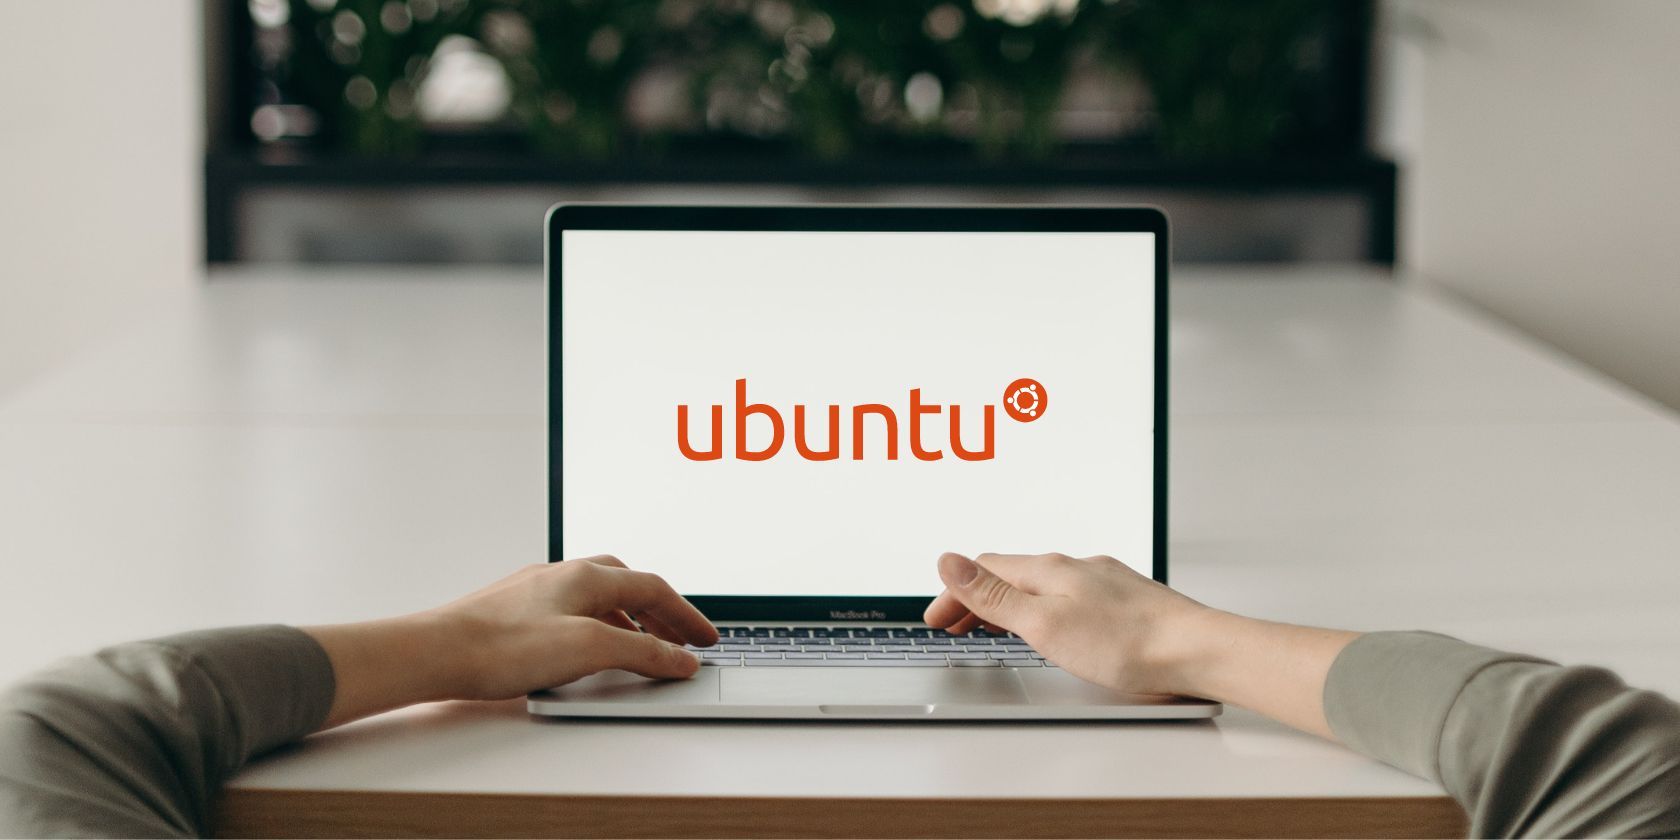 How to Run Ubuntu Installed on a USB Drive in a Windows Virtual Machine